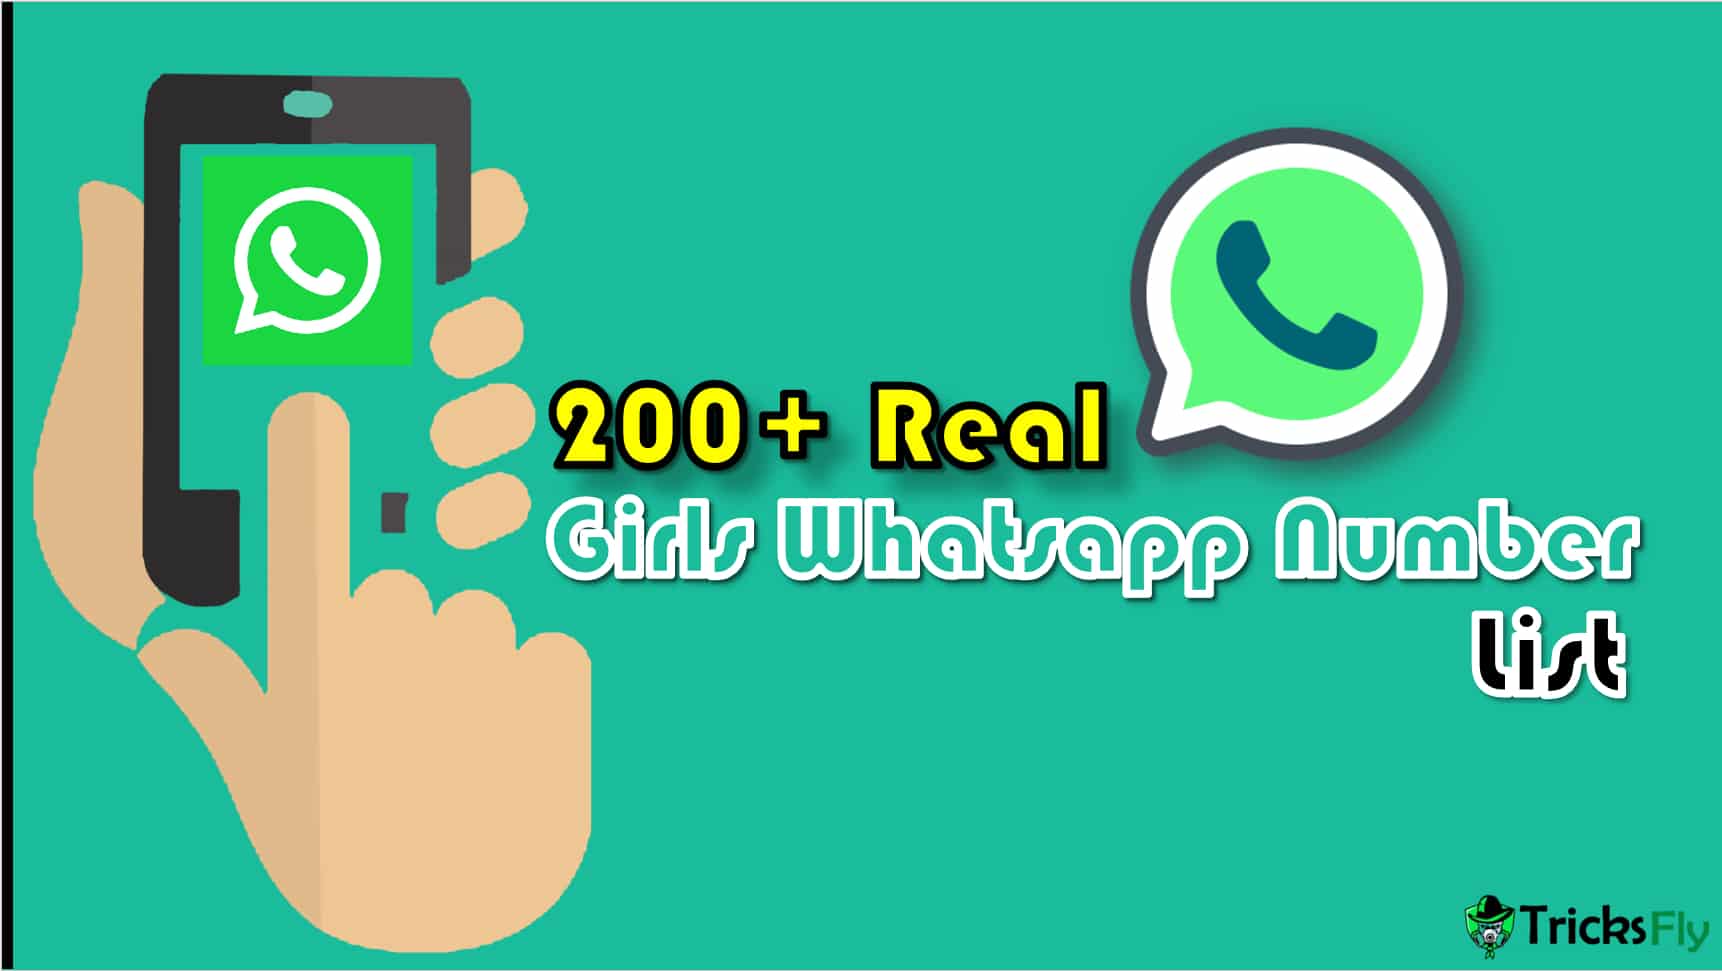 Real girls whatsapp number list